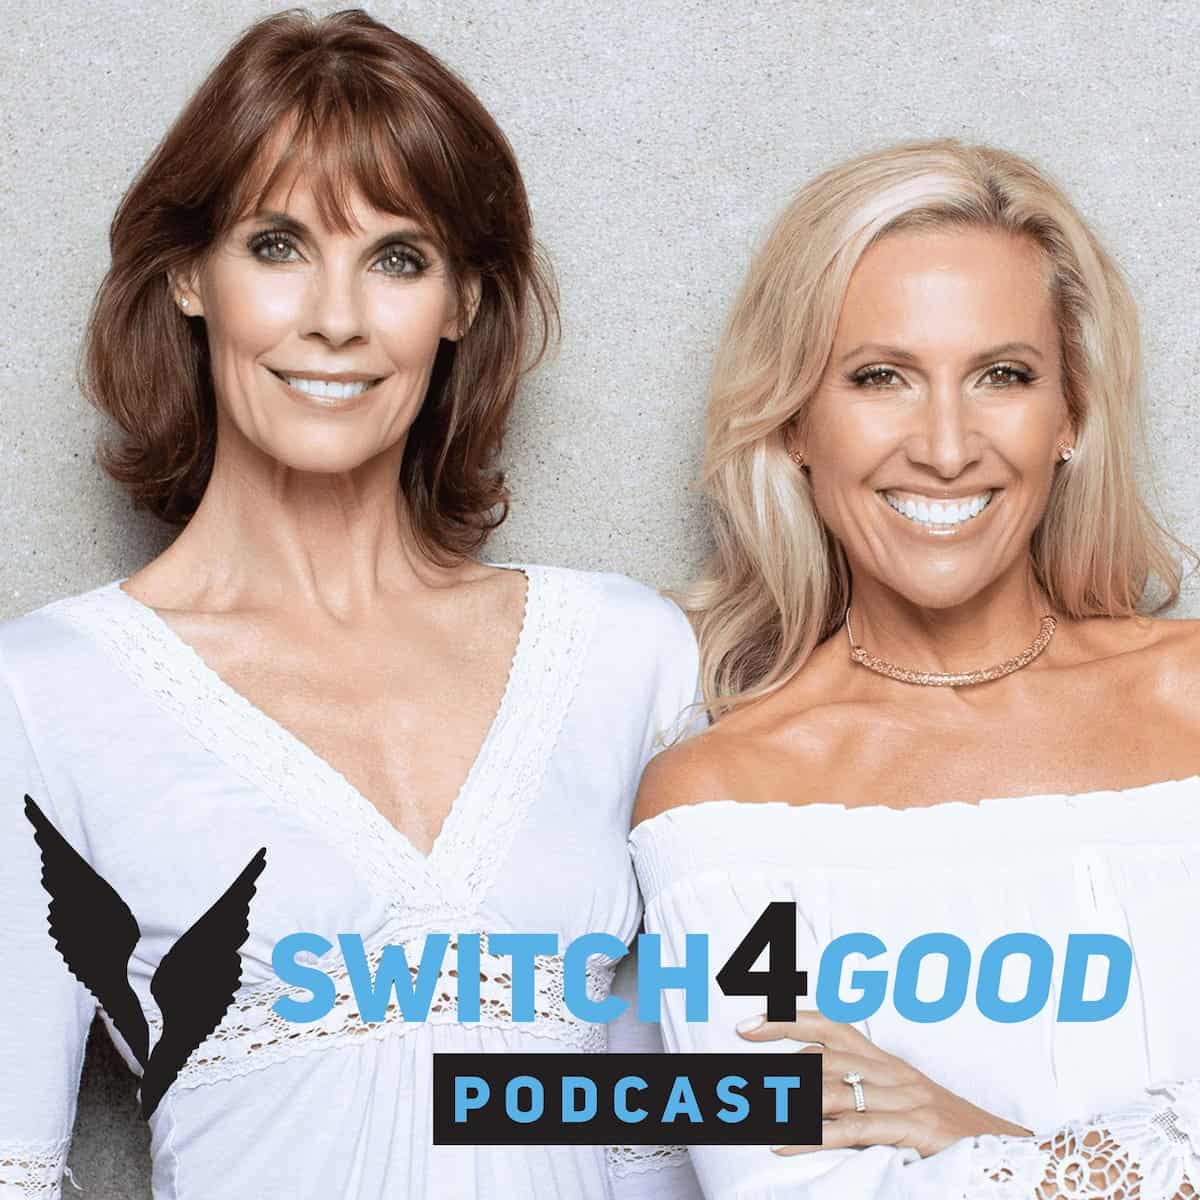 Switch 4 Good Podcast covert art.